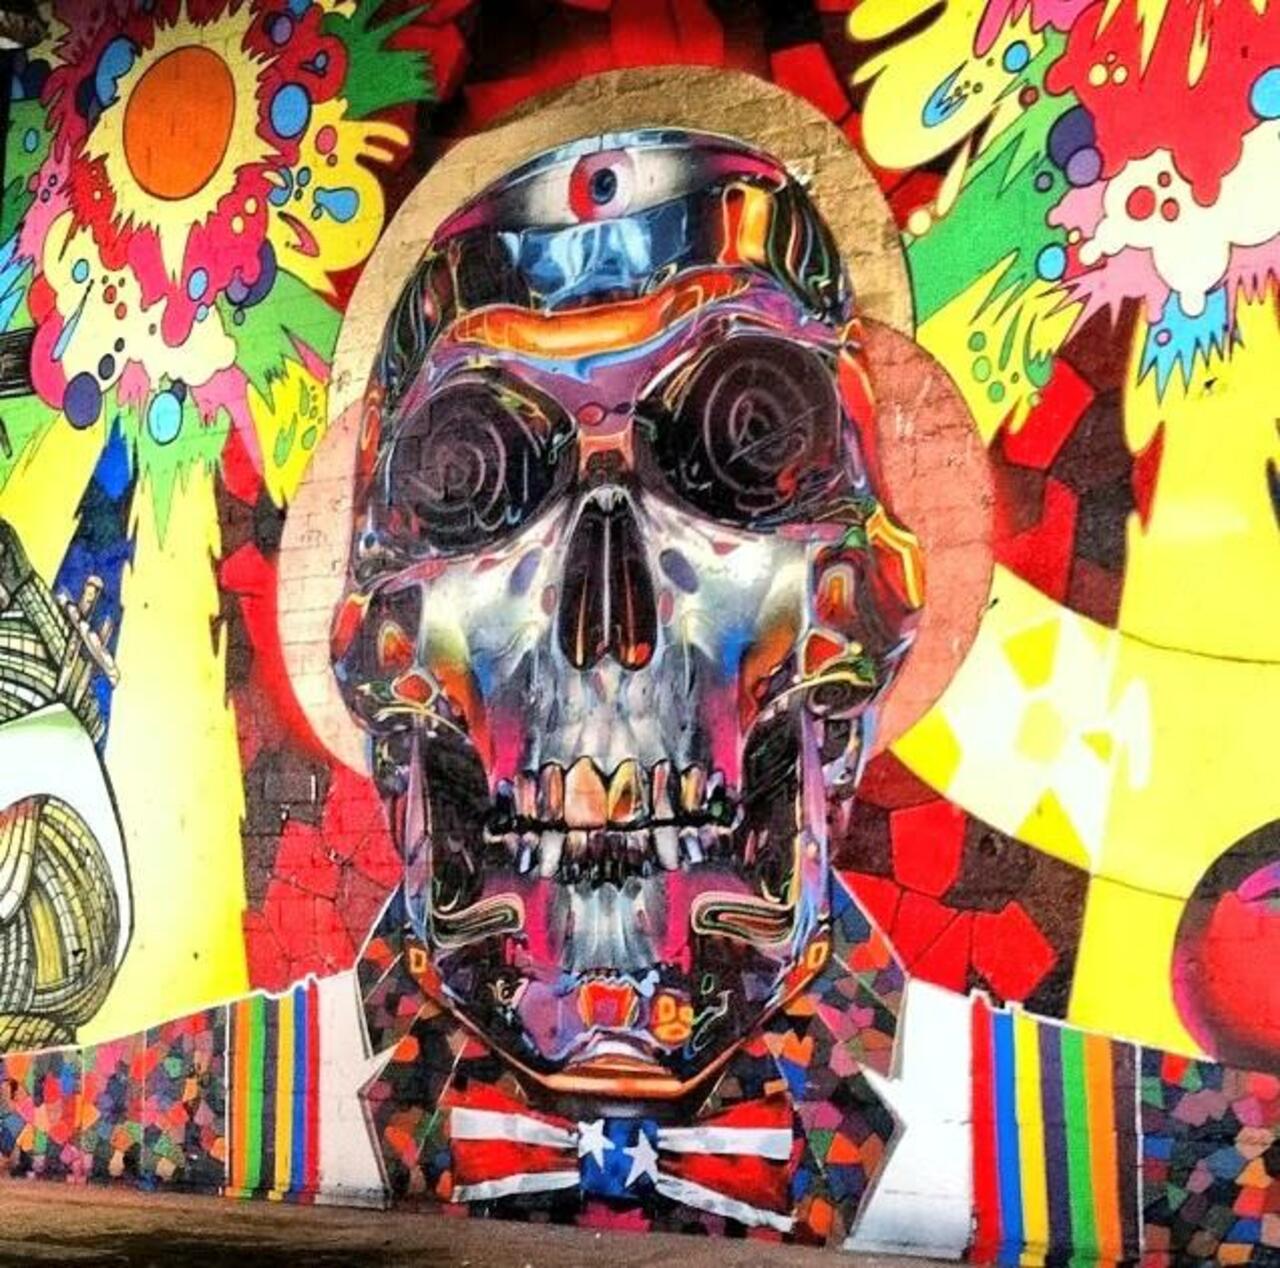 CHOR BOOGIE’s skull & Max330Mega background

#streetart #art #urbanart #graffiti #mural http://t.co/nFAkIi6Cwh